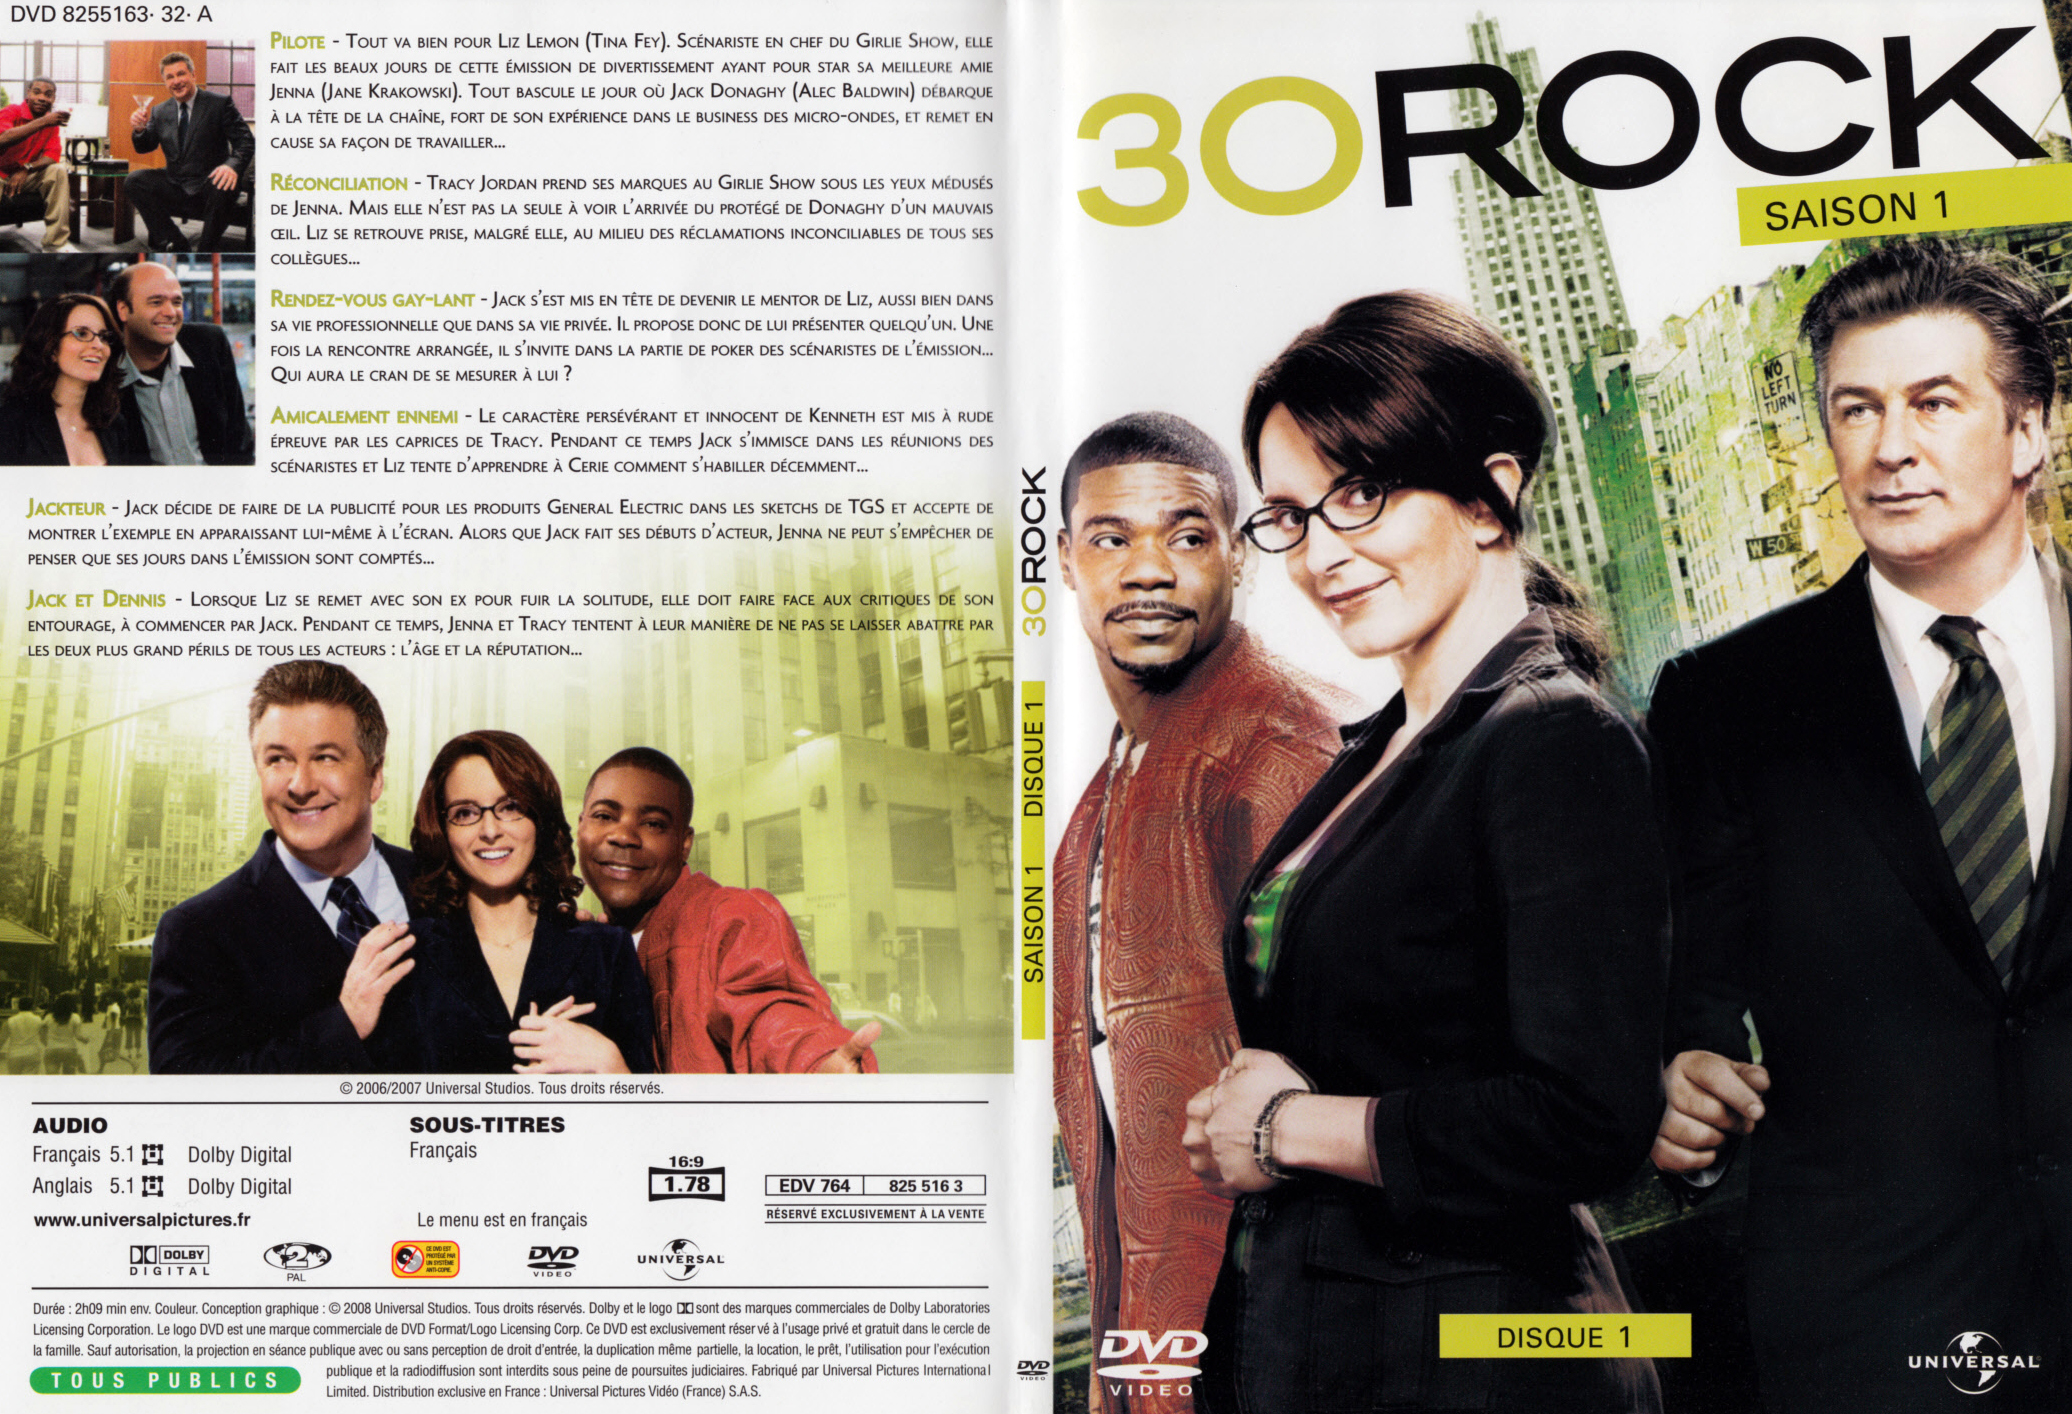 Jaquette DVD 30 Rock Saison 1 DVD 1